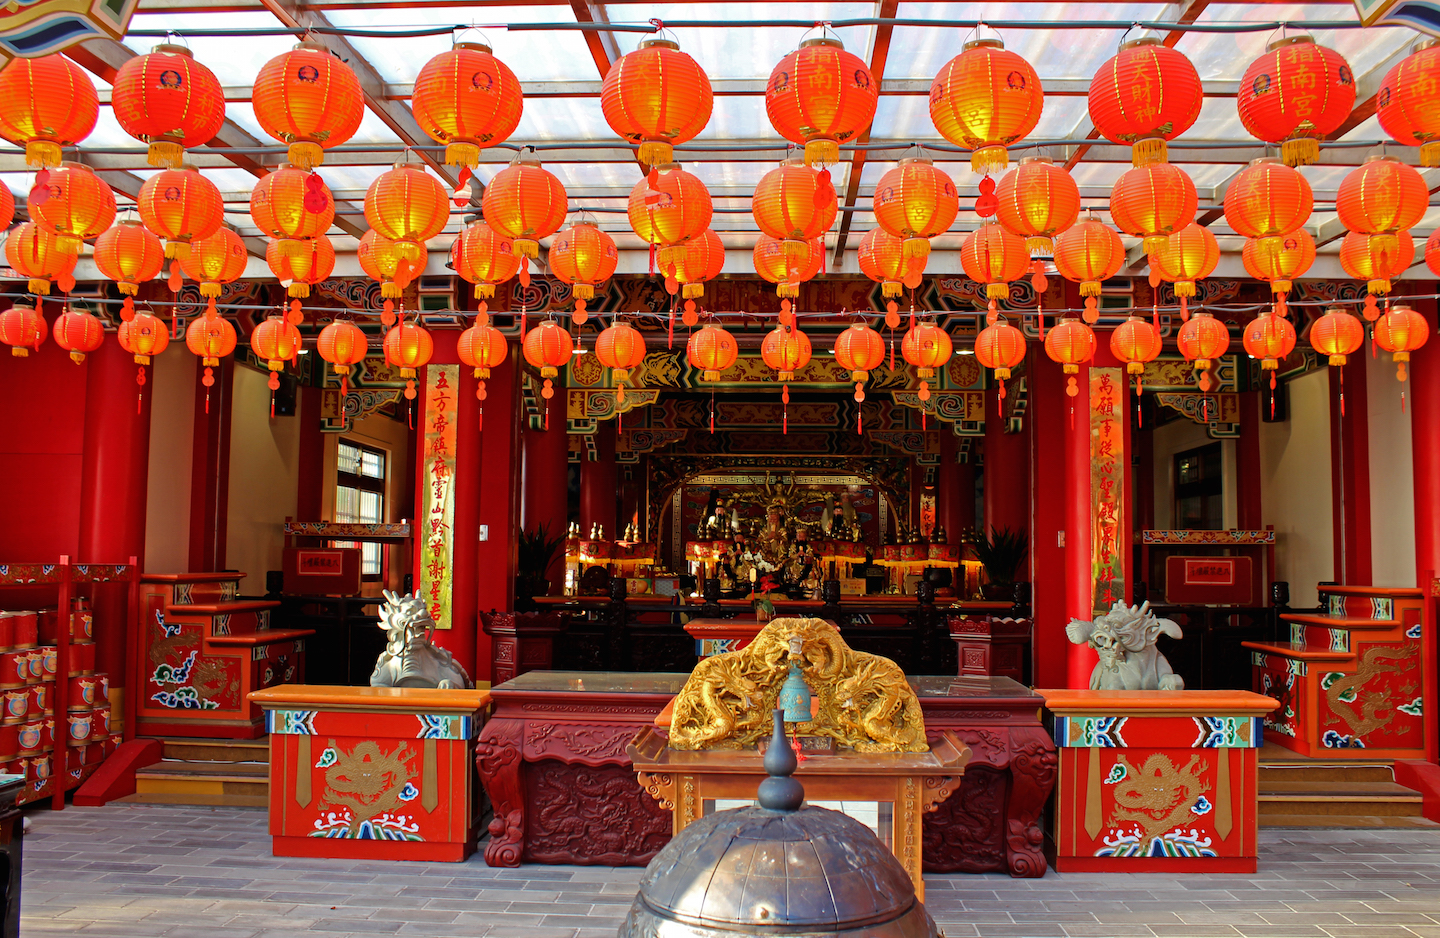 Lanterns at Zhinan Temple